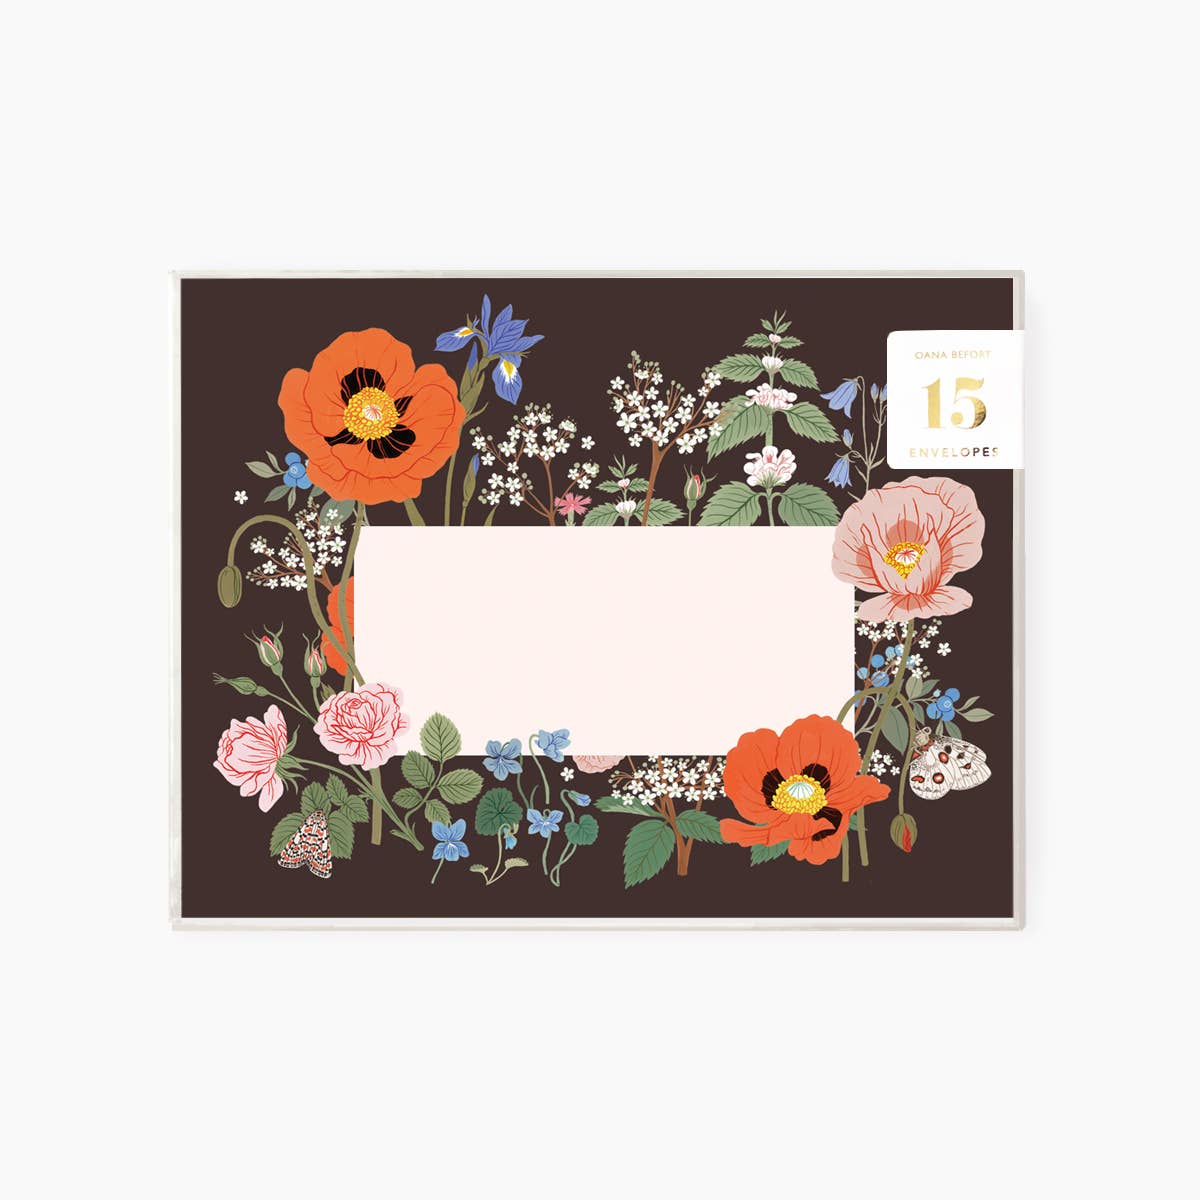 WILD FLOWERS | Boxed set of 15 envelopes